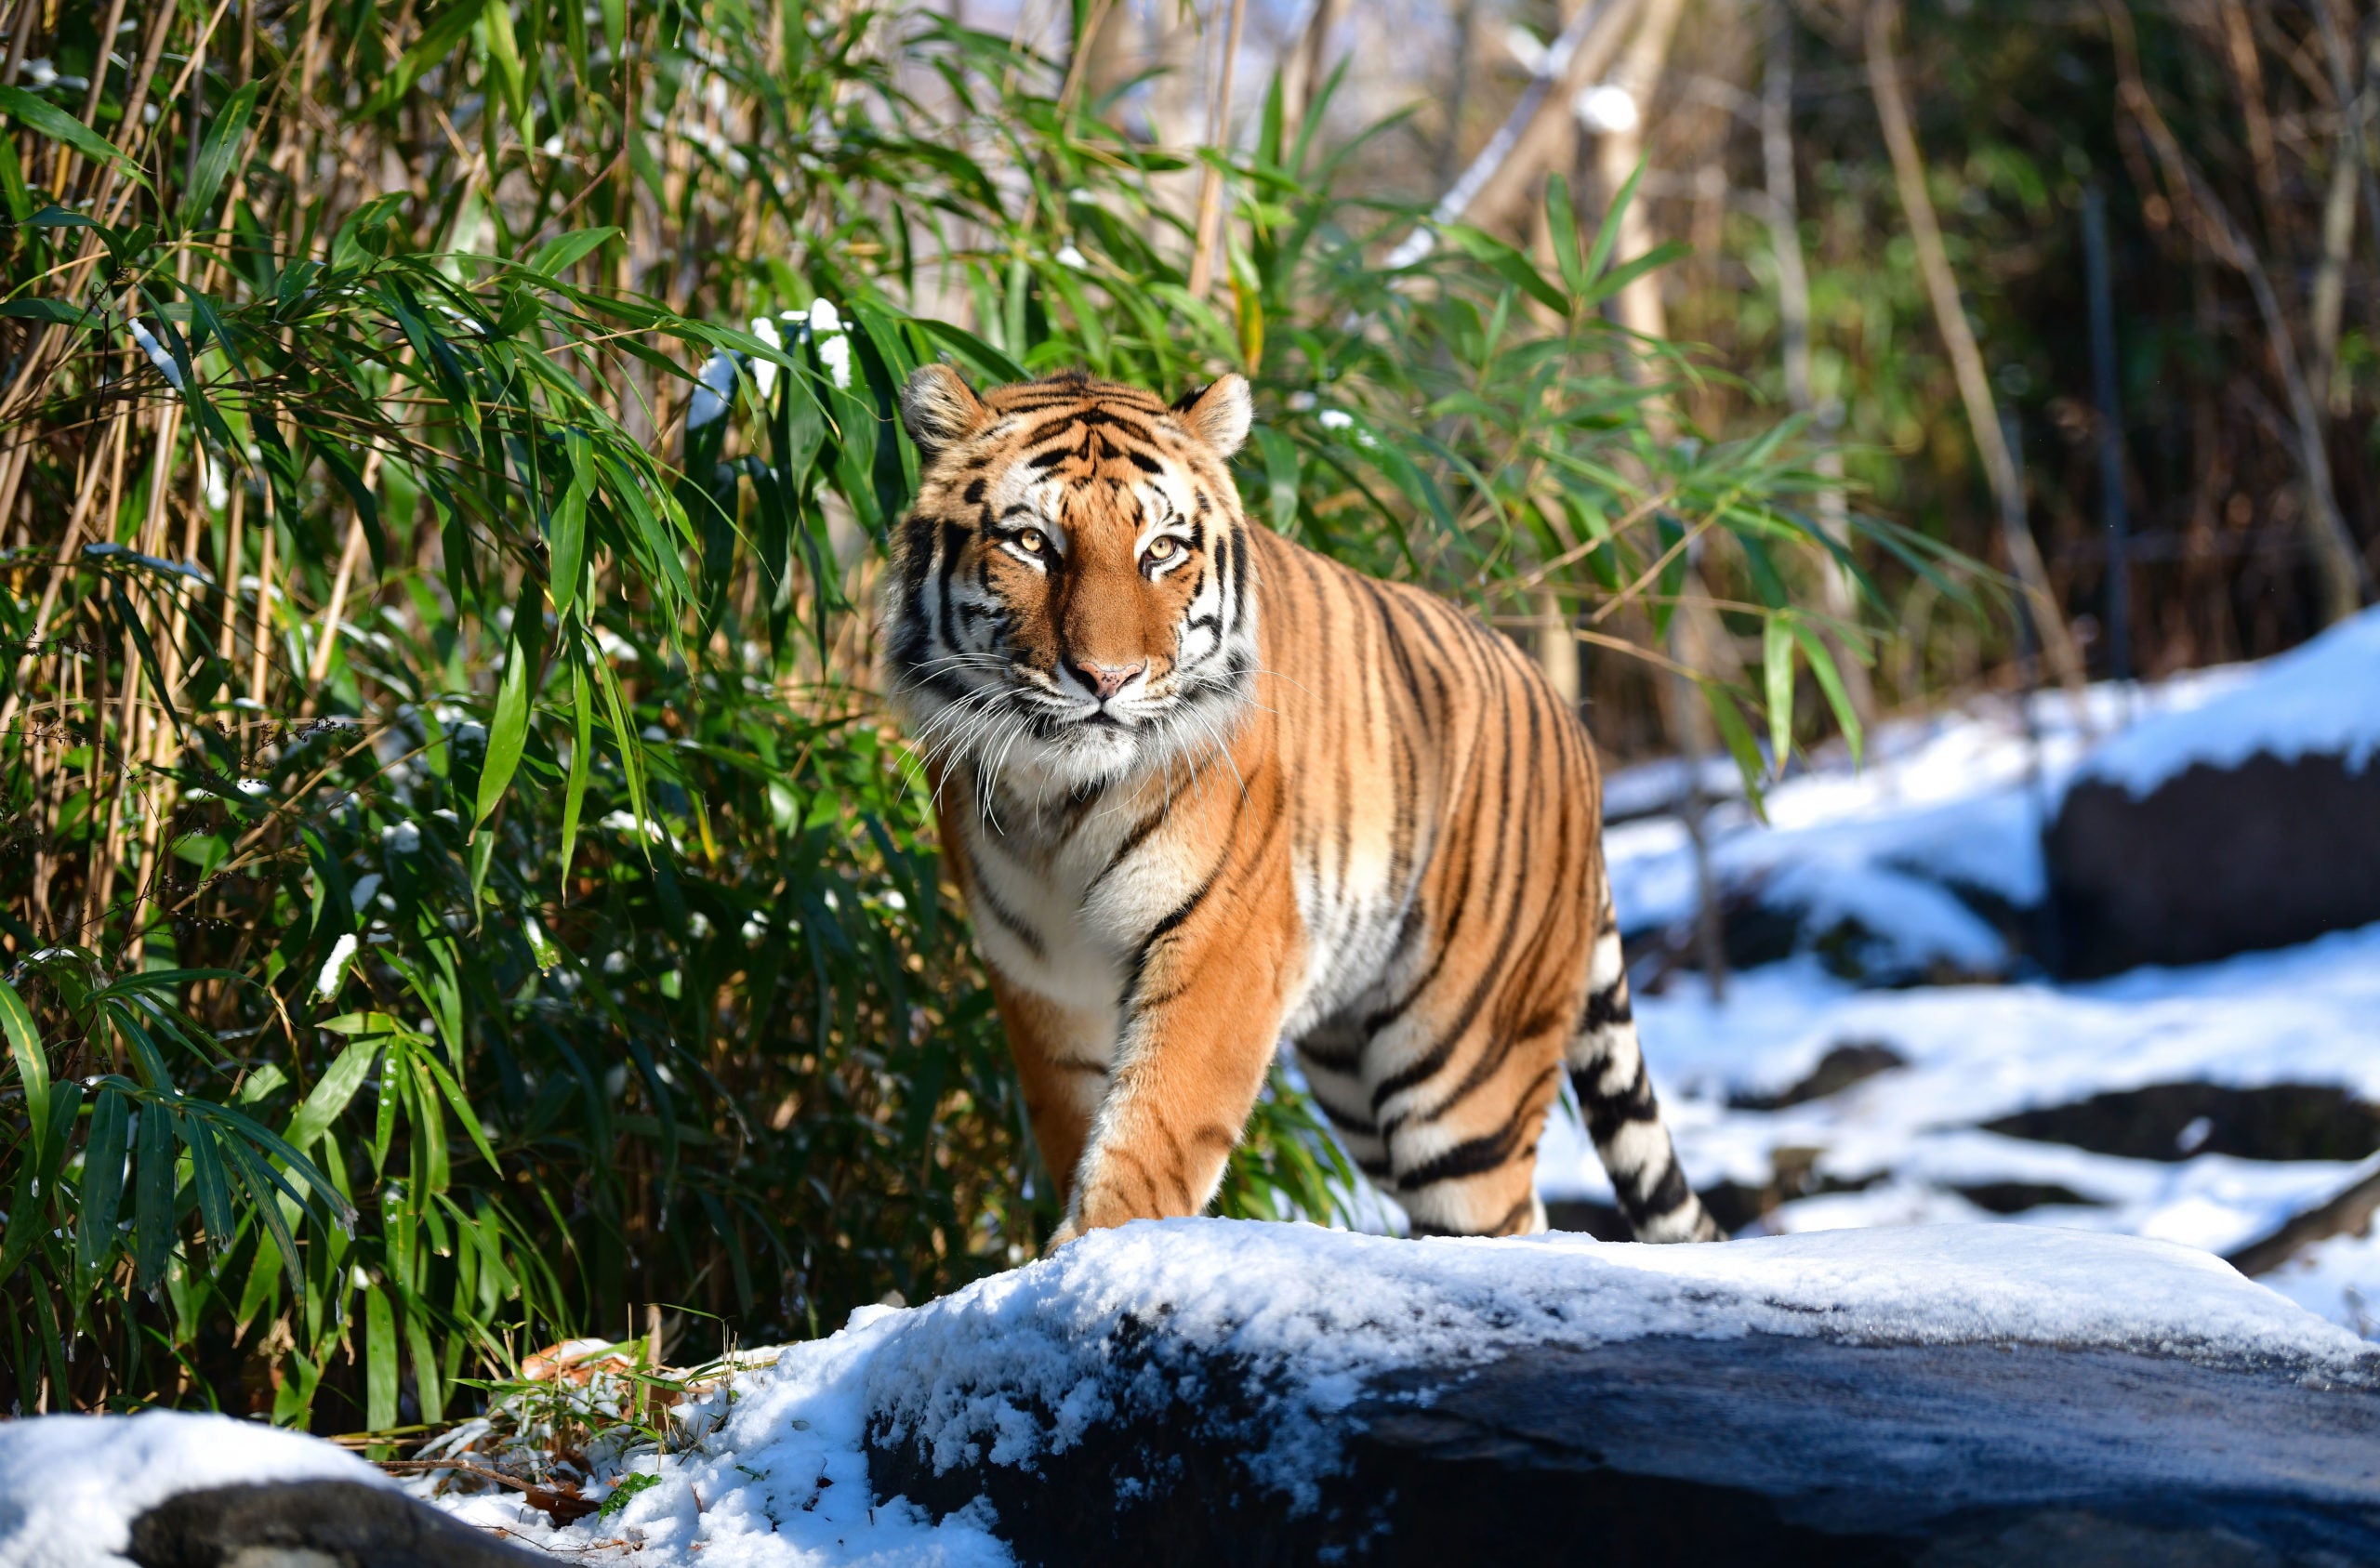 Tiger at NYC's Bronx Zoo tests positive for coronavirus - WISH-TV ...